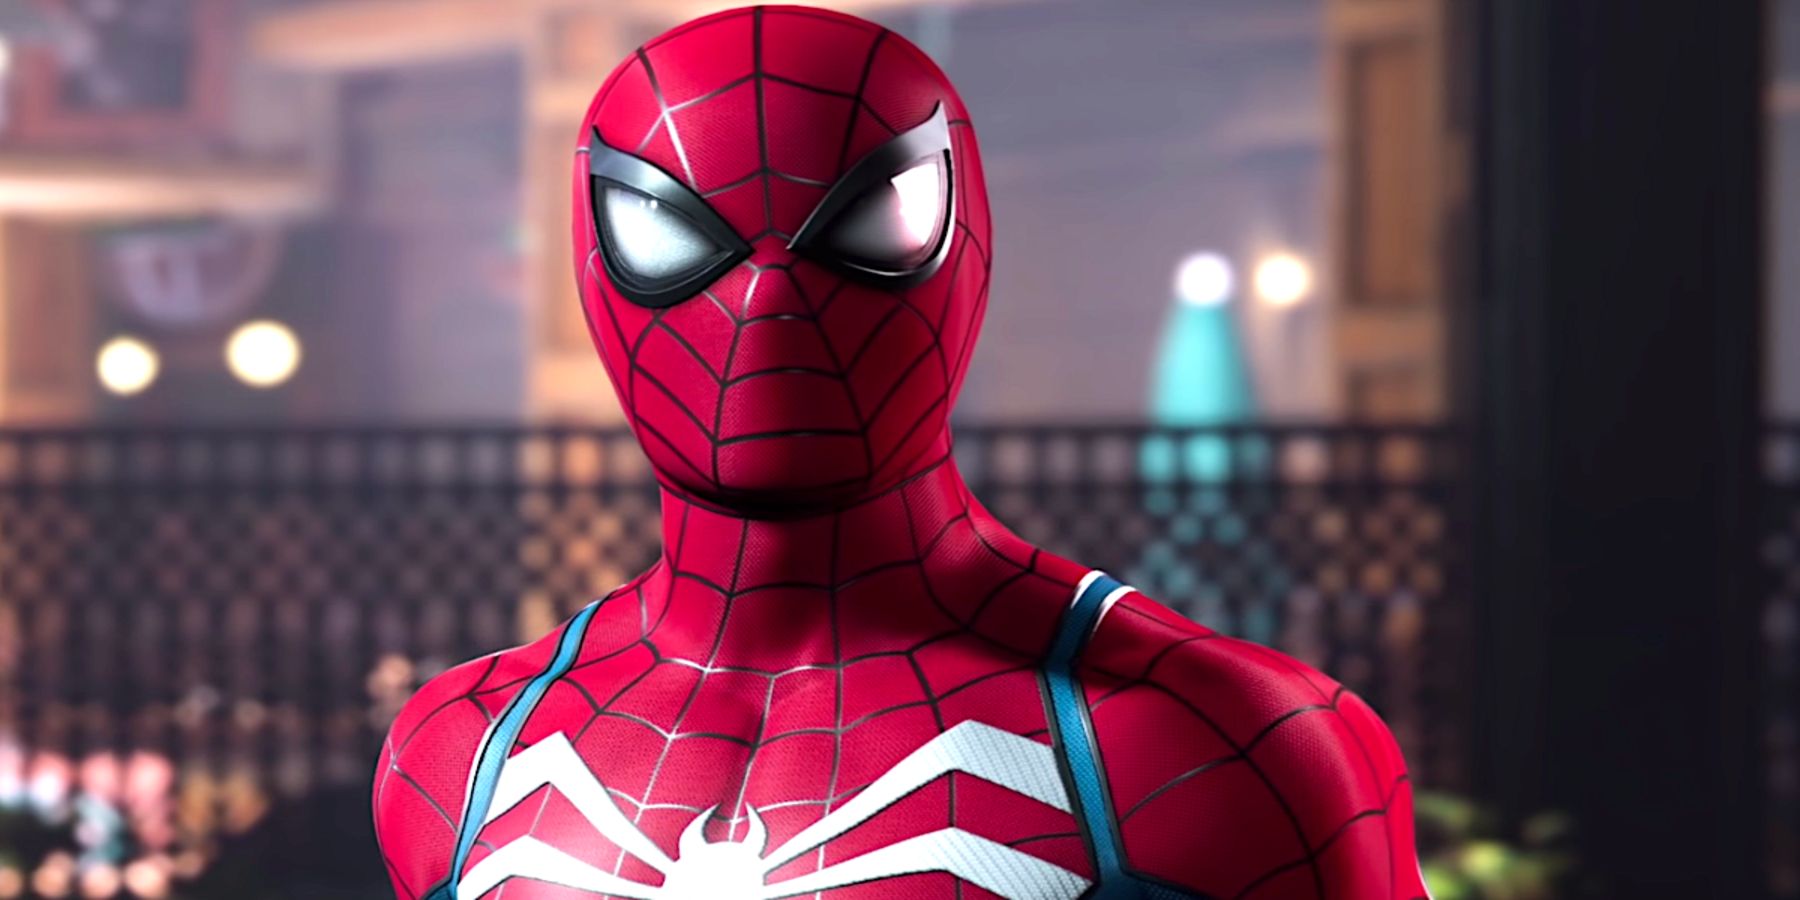 Hilarische video voegt Bully Maguire toe aan Marvel’s Spider-Man 2-trailer